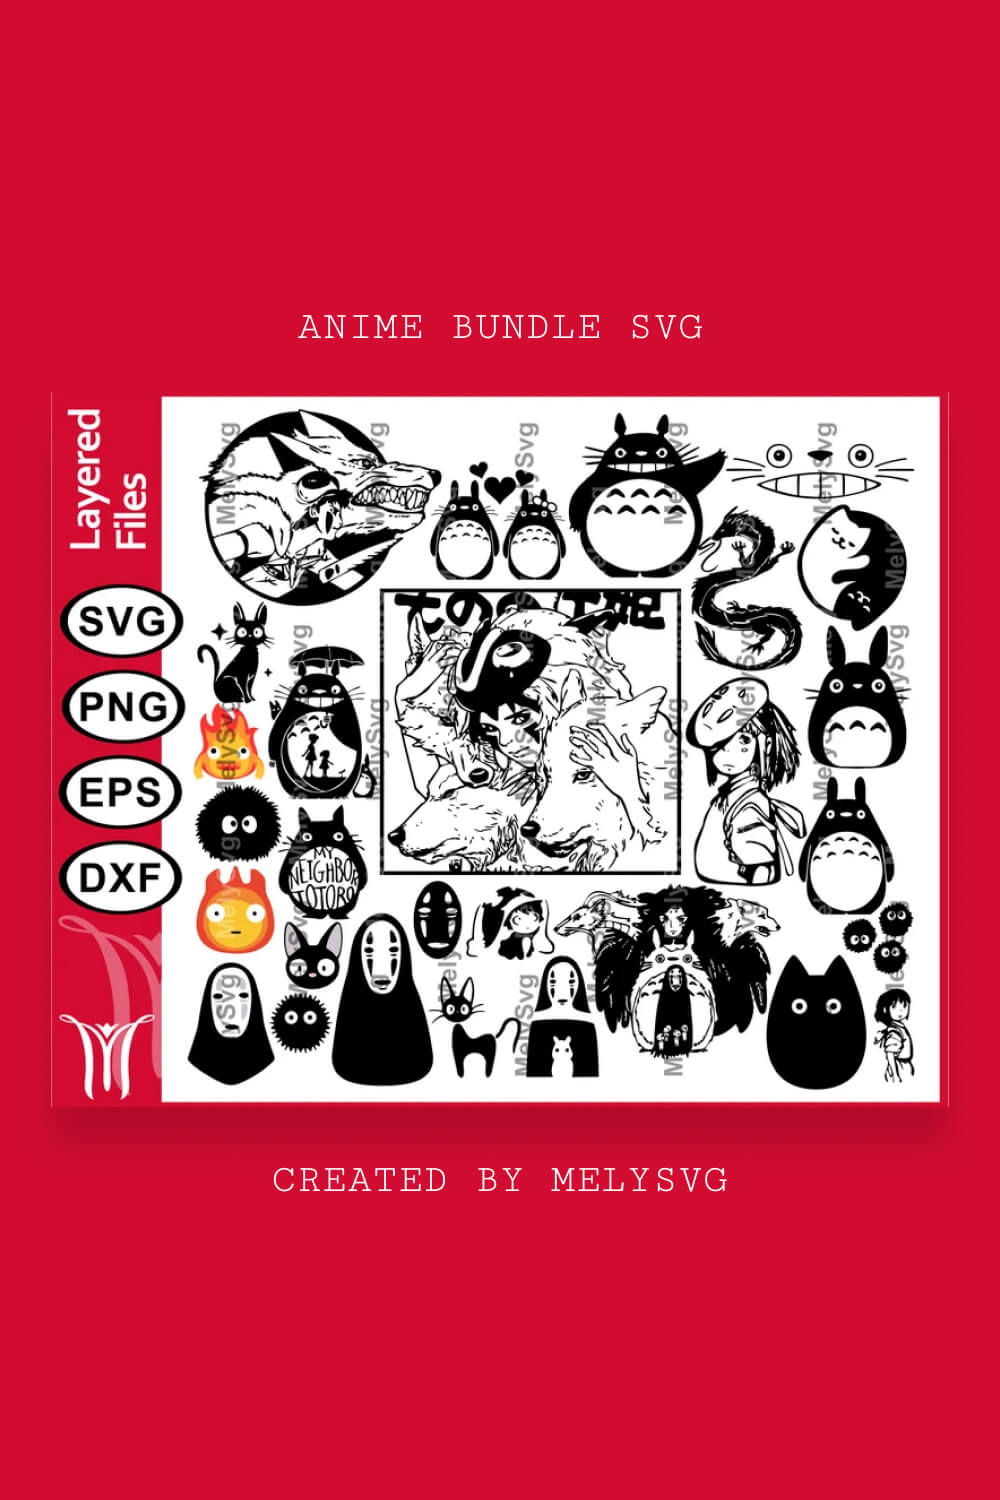 Anime Bundle SVG.